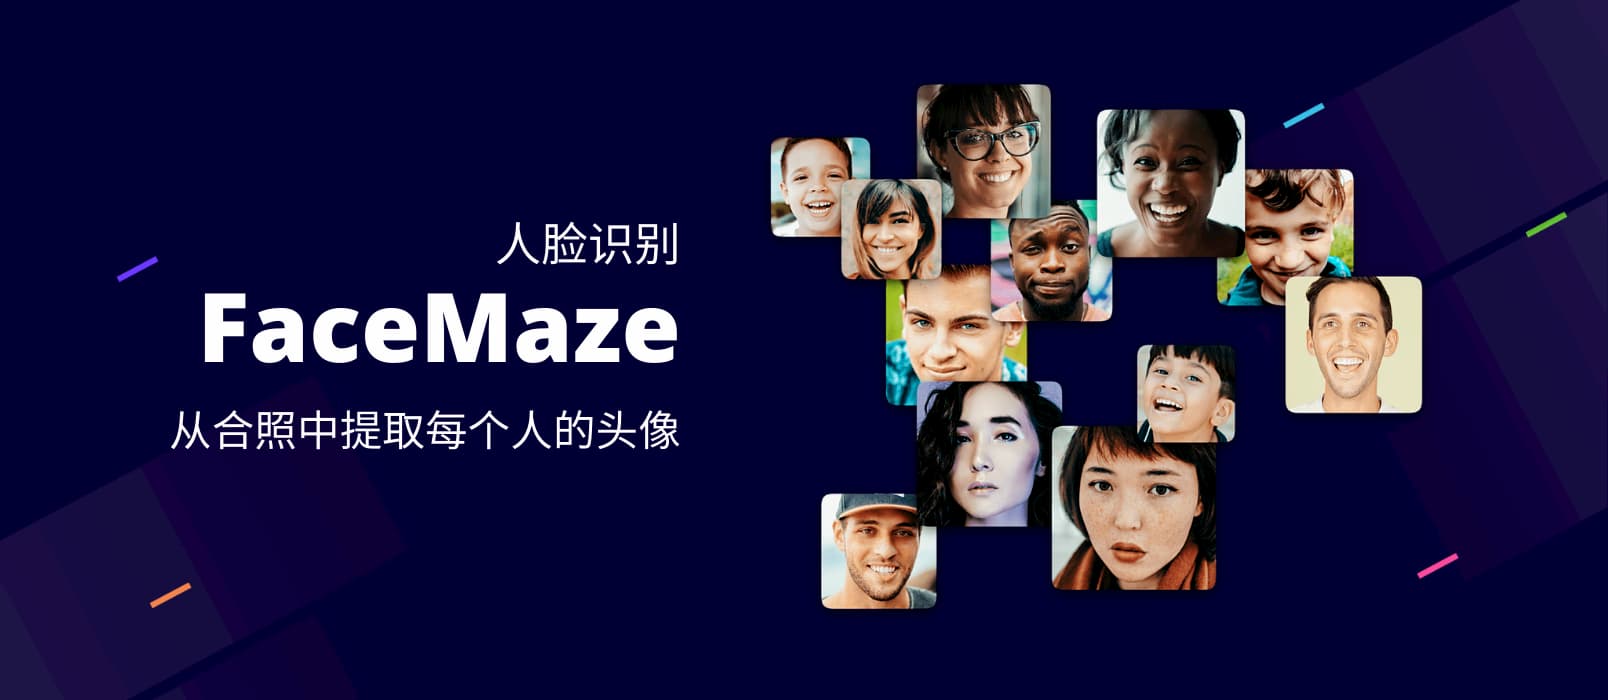 FaceMaze - 人脸识别，从合照中提取每个人的人脸头像 1